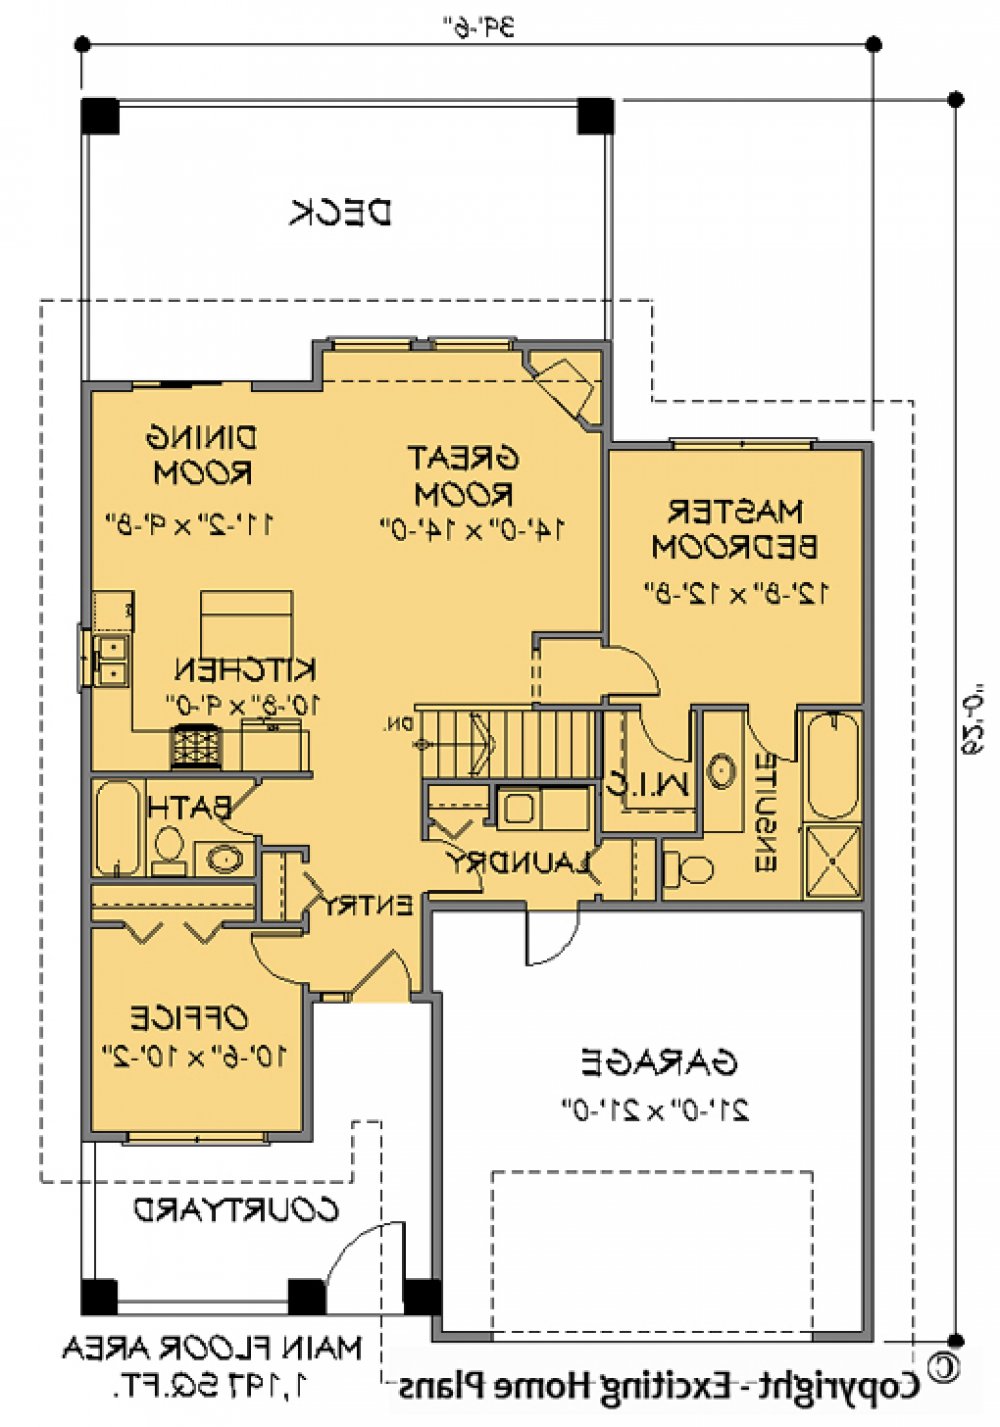 House Plan E1136-10 Main Floor Plan REVERSE